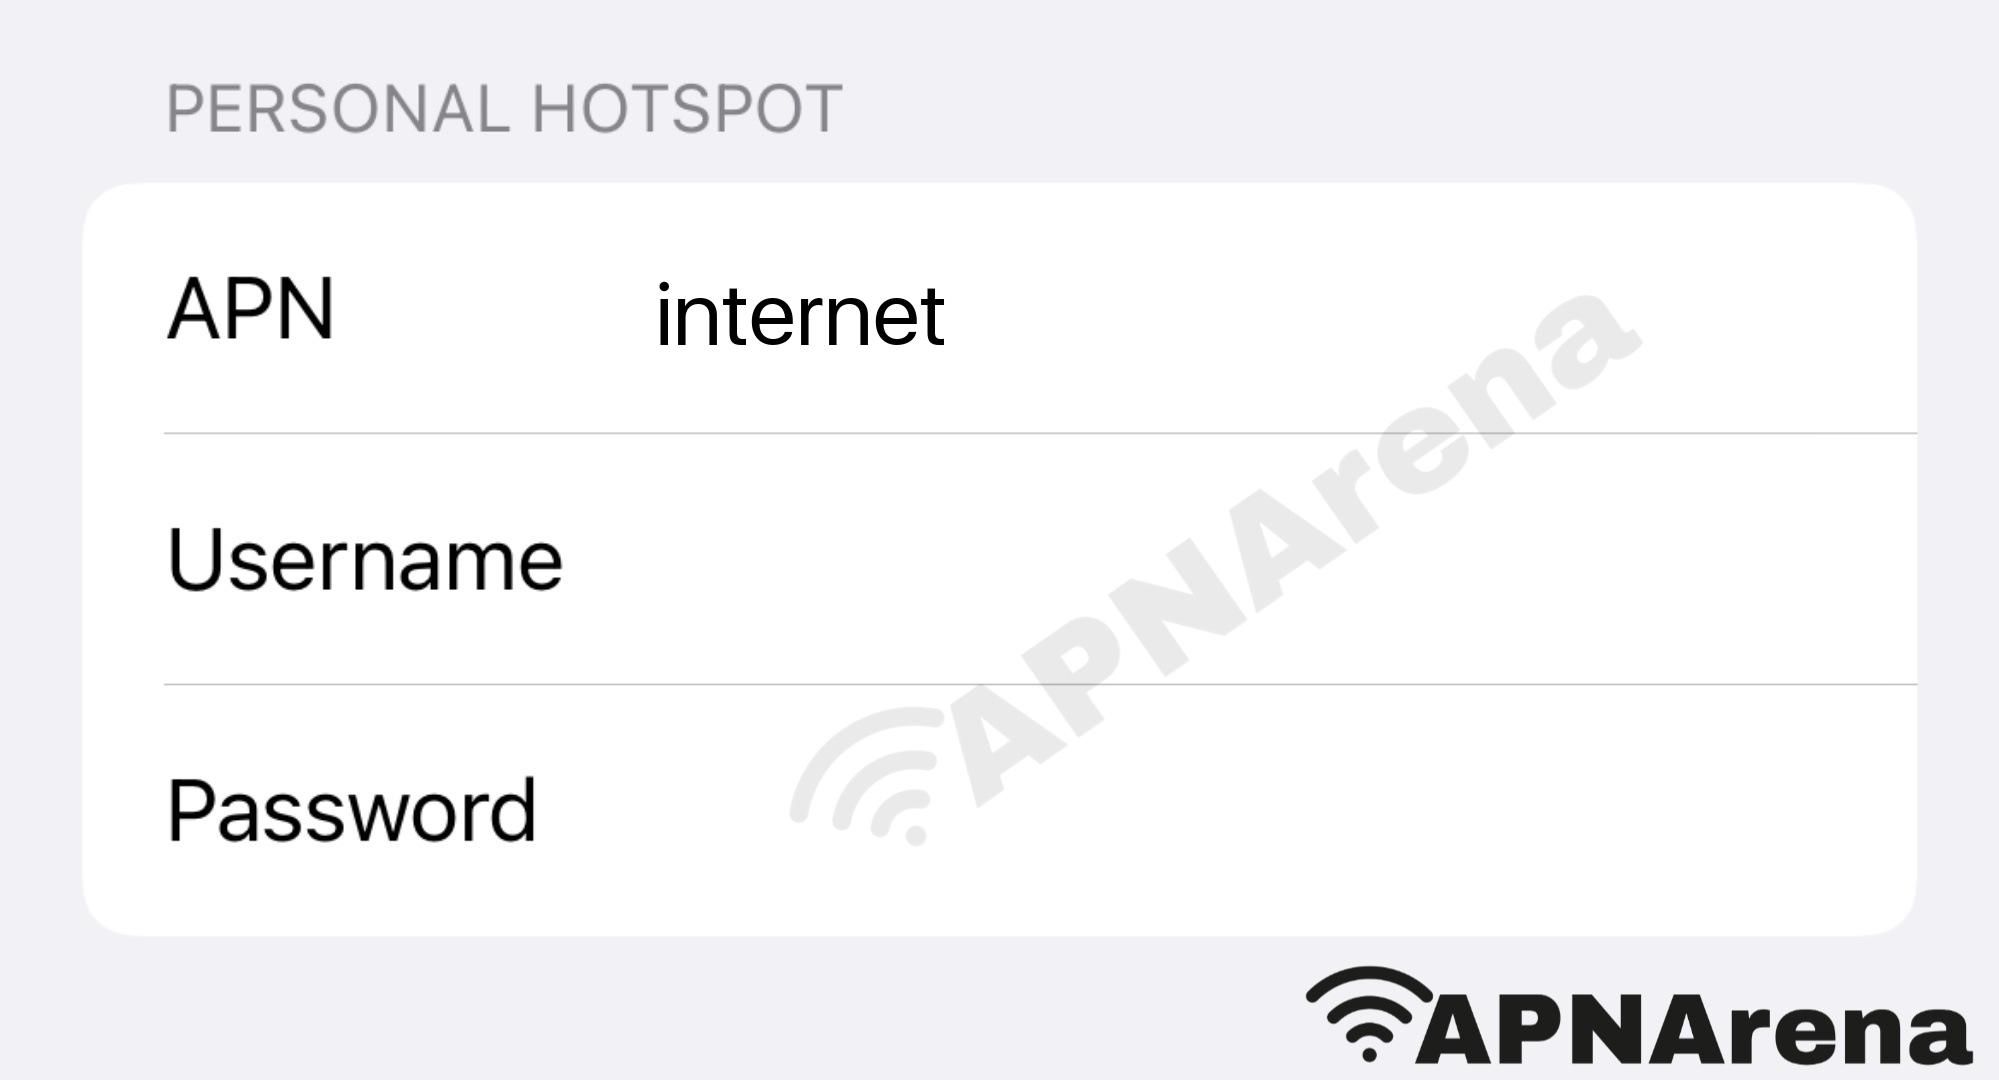 Seawolf Wireless Personal Hotspot Settings for iPhone